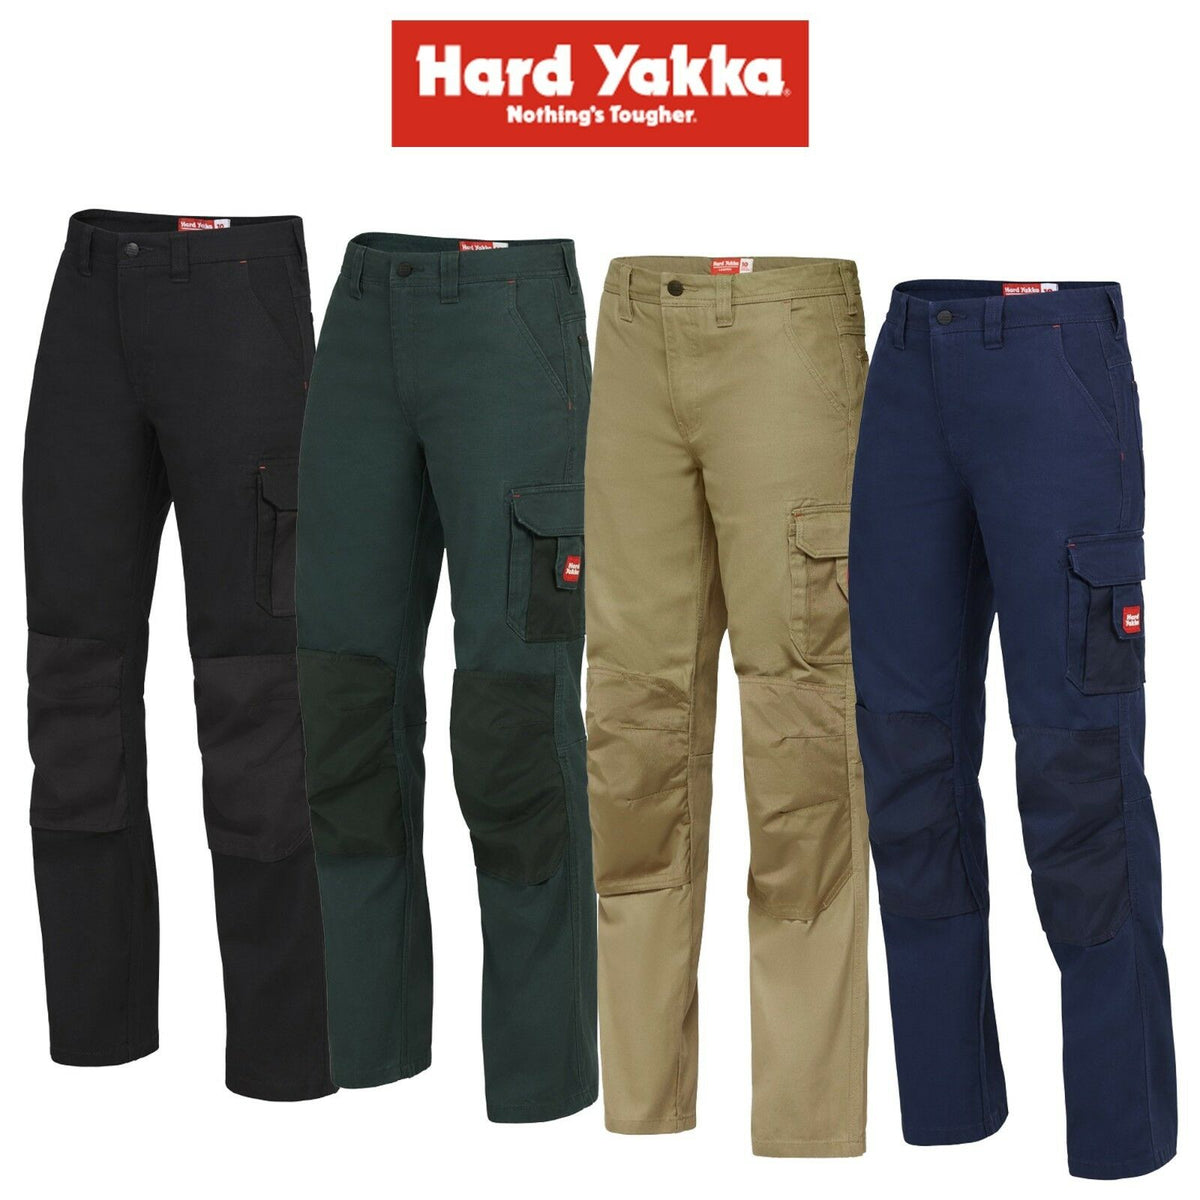 Hard Yakka Womens Legends Work Tough Pants Cargo Panama Weave Cotton Y08079